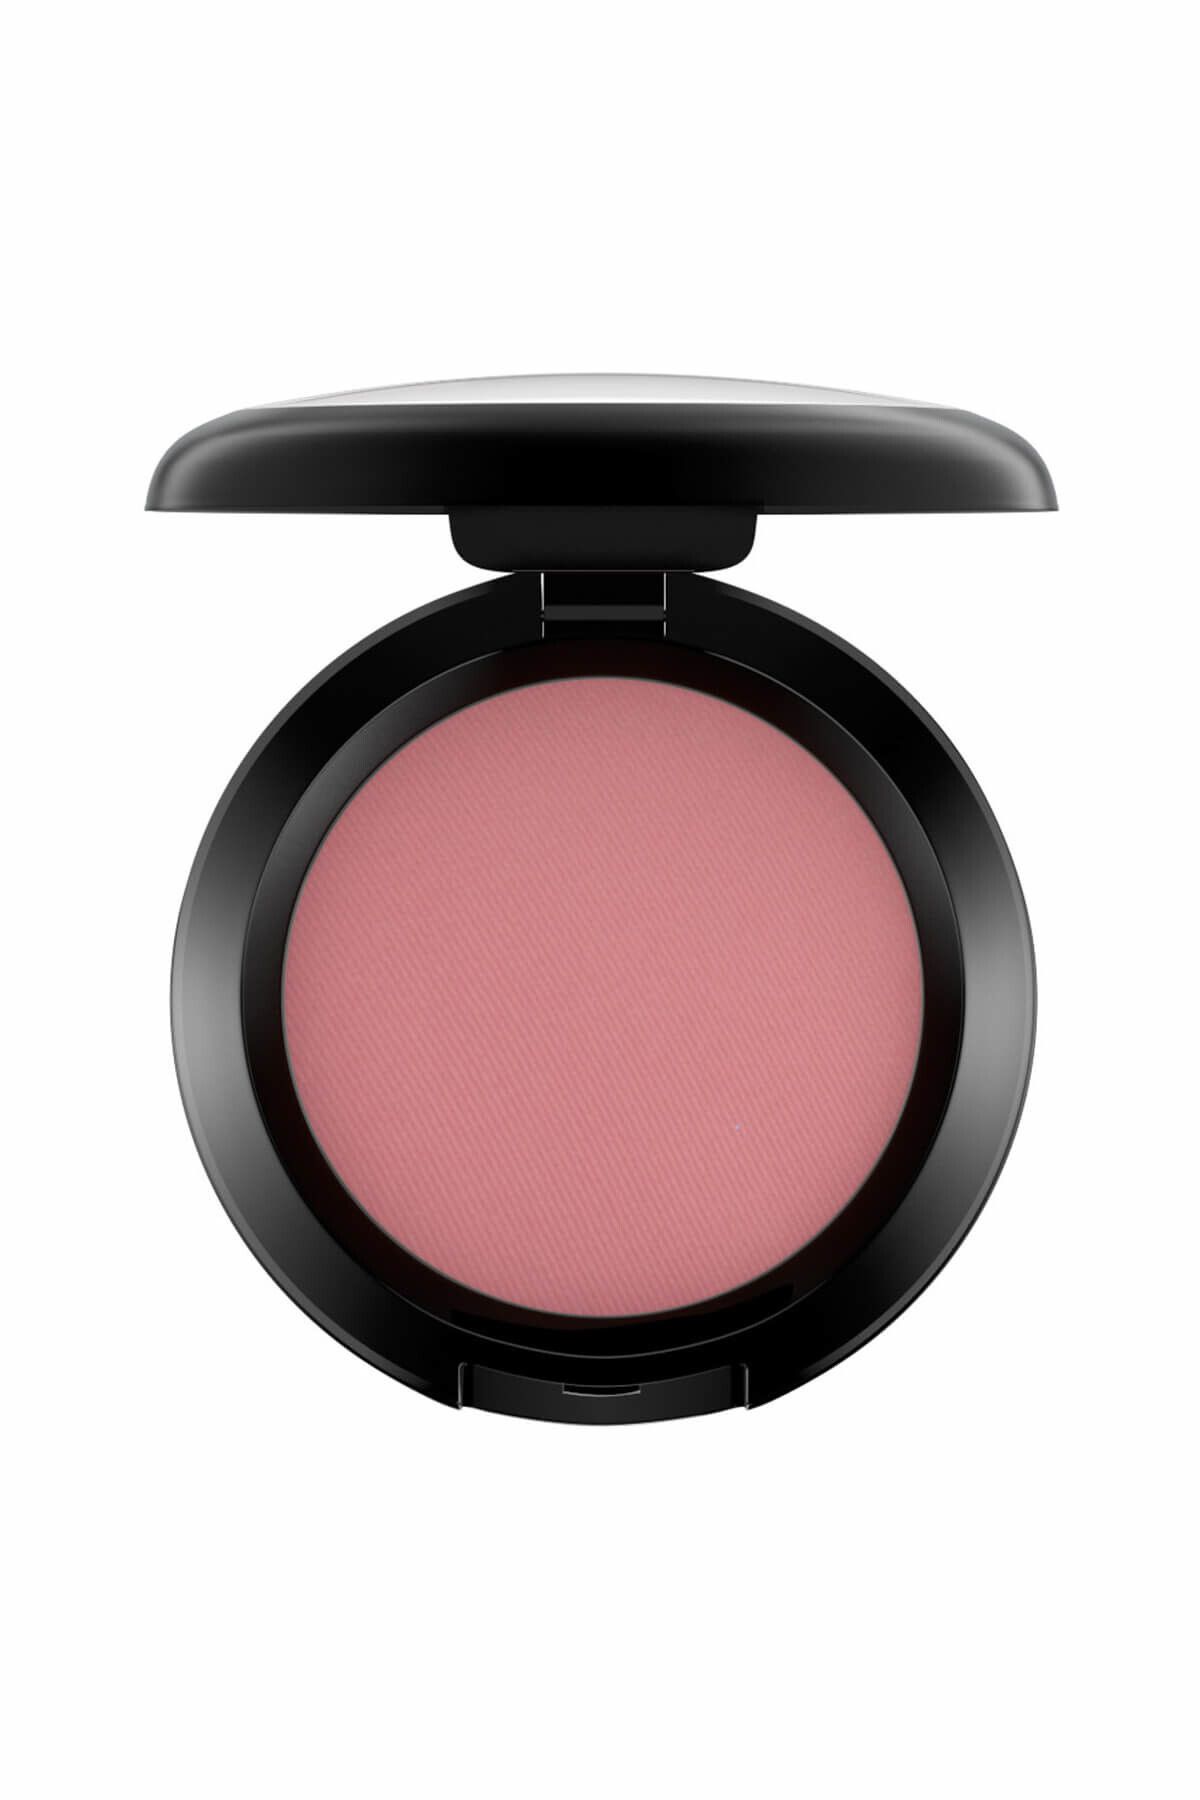 Mac MAC Mükemmel Renk Sağlayan Powder Blush Desert Rose Allık - 6 G